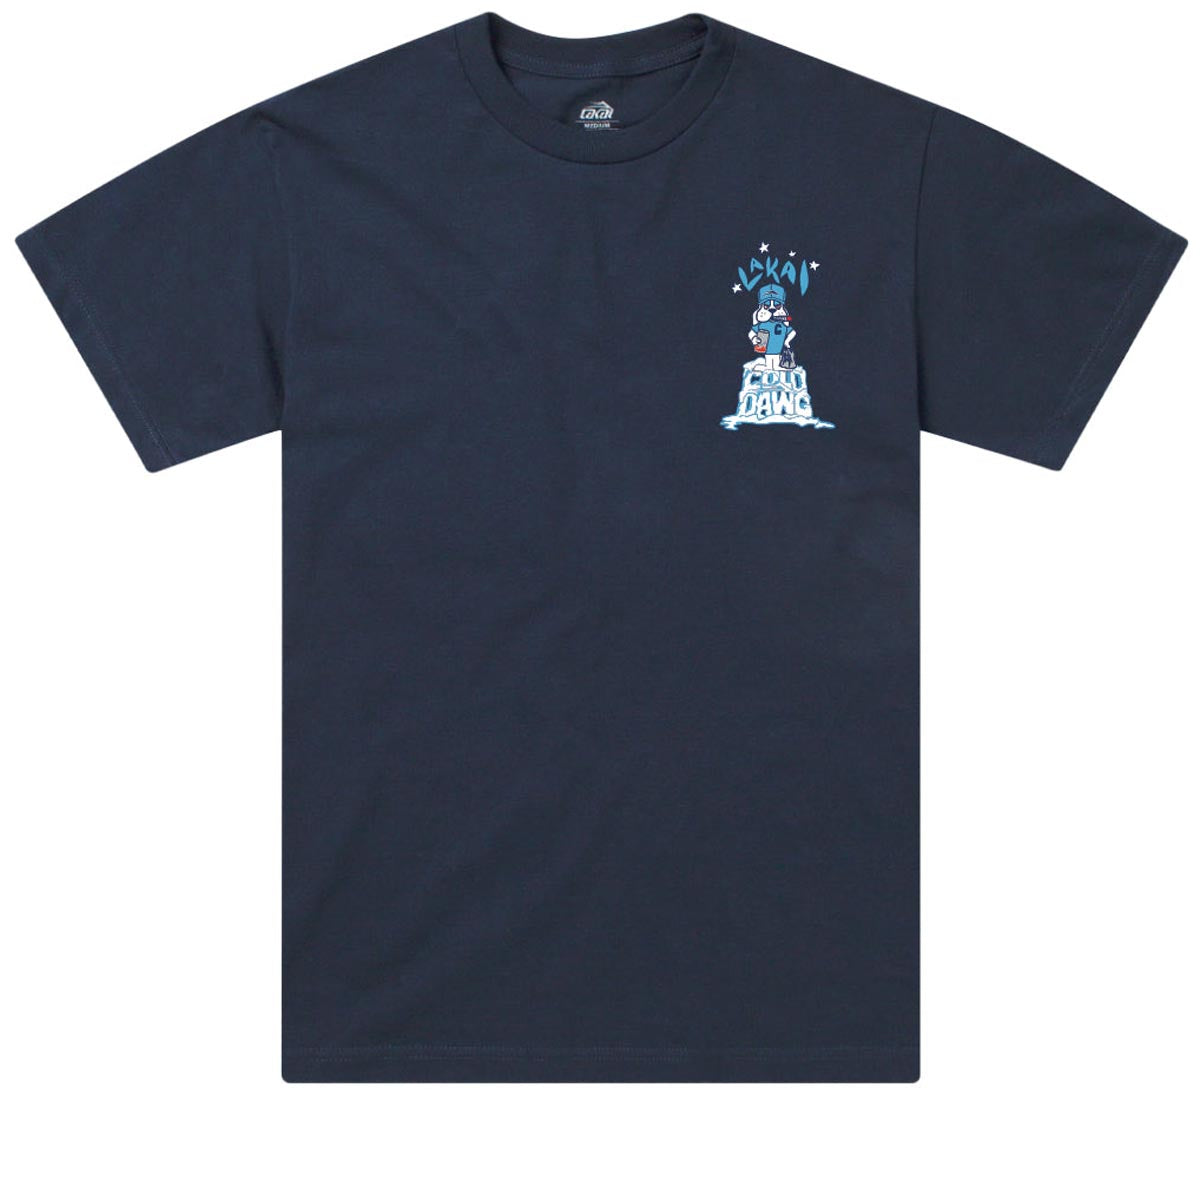 Lakai Cold Dawg T-Shirt - Navy image 1